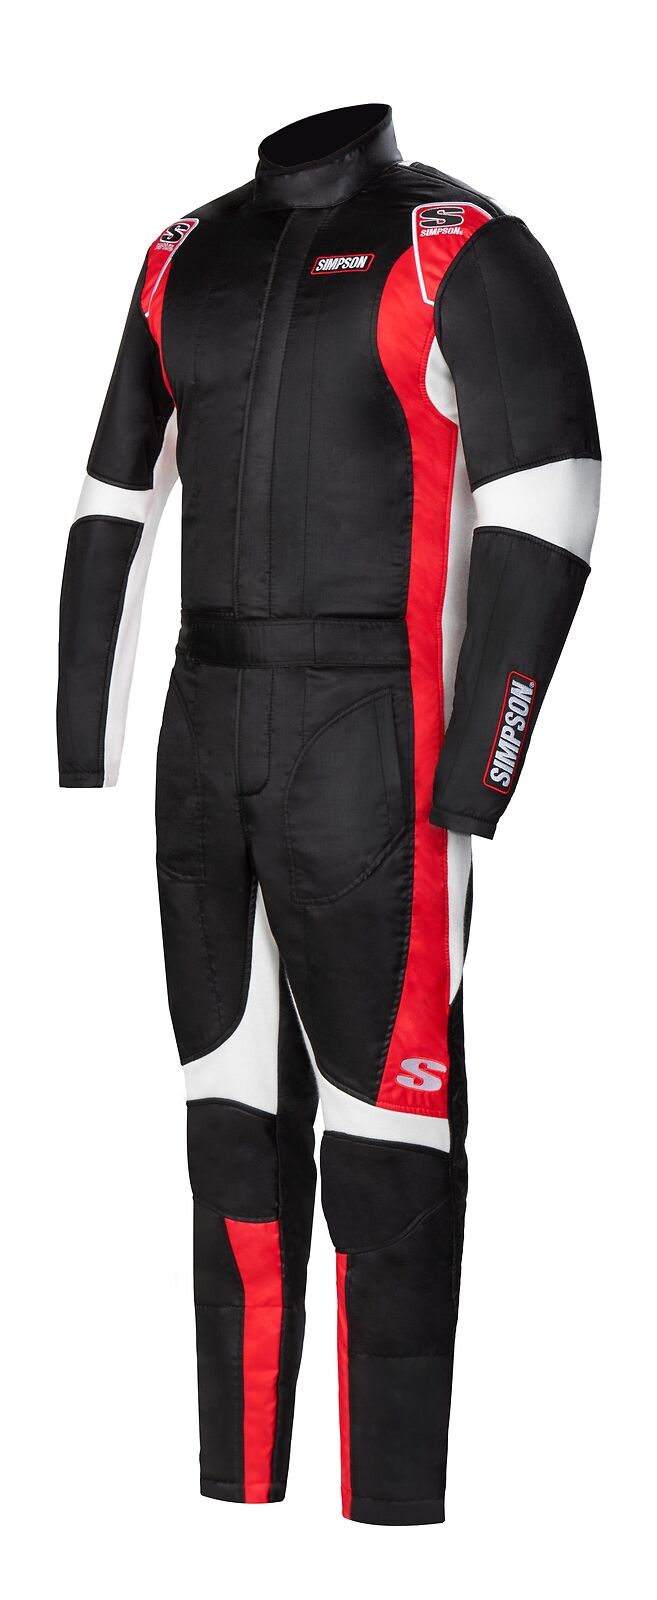 Simpson Racing SC02401 Supercoil Racing Suit Black - XL